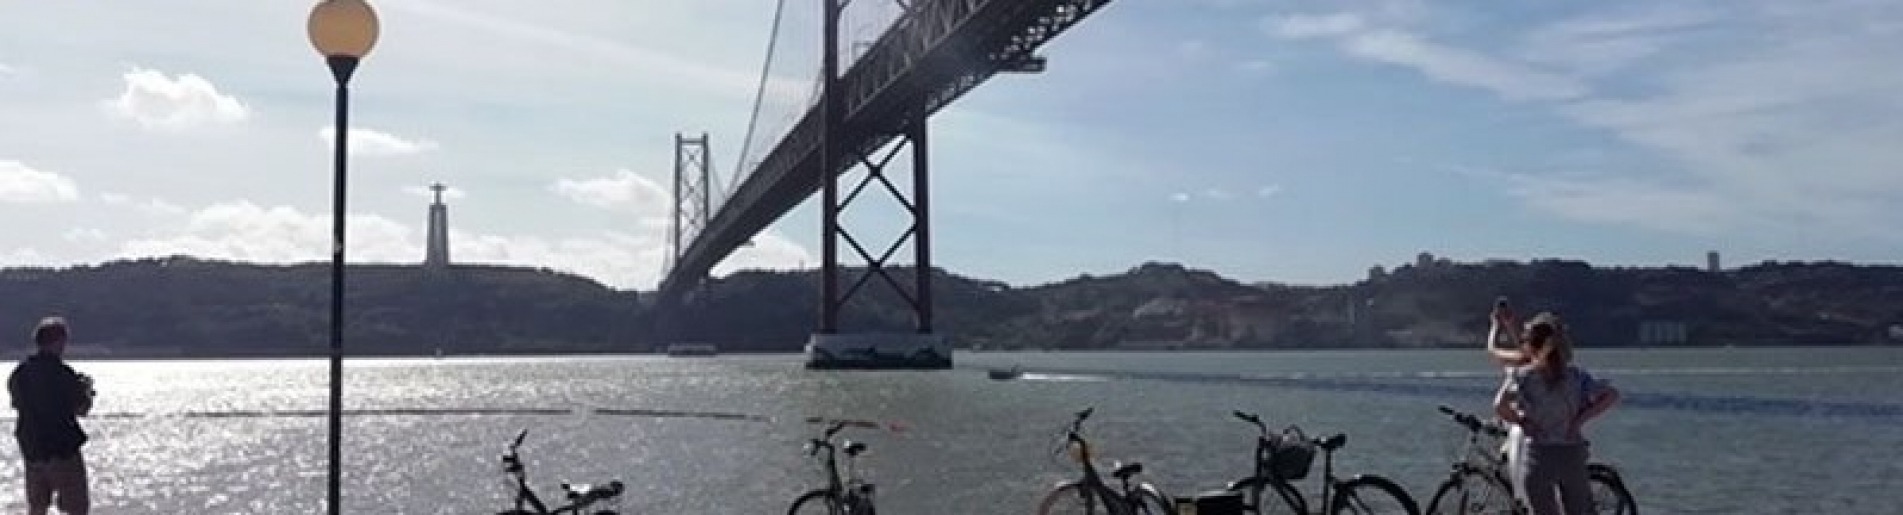 free-bike-tours-lisbon-belem-blog-4-tagus-bridge-394x394